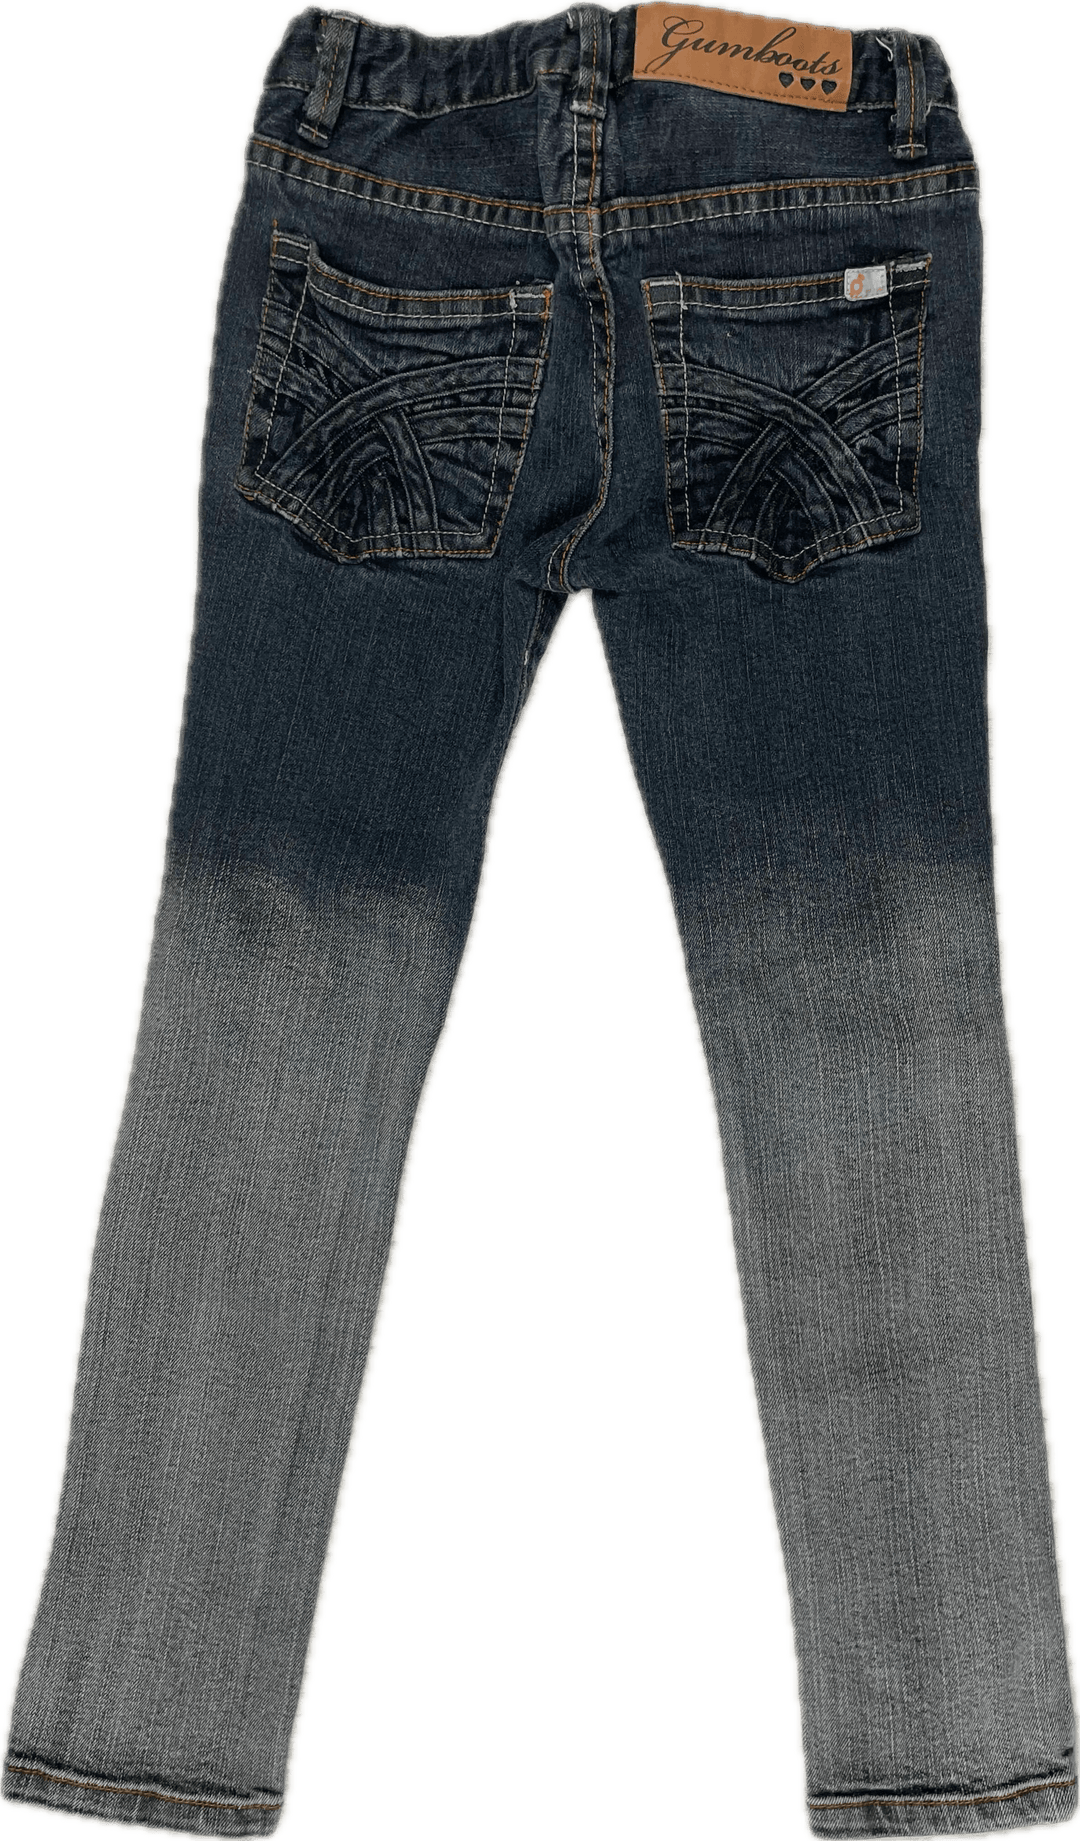 Gumboots Girls Dip Dye Skinny Jeans - Size 5/6Y - Jean Pool